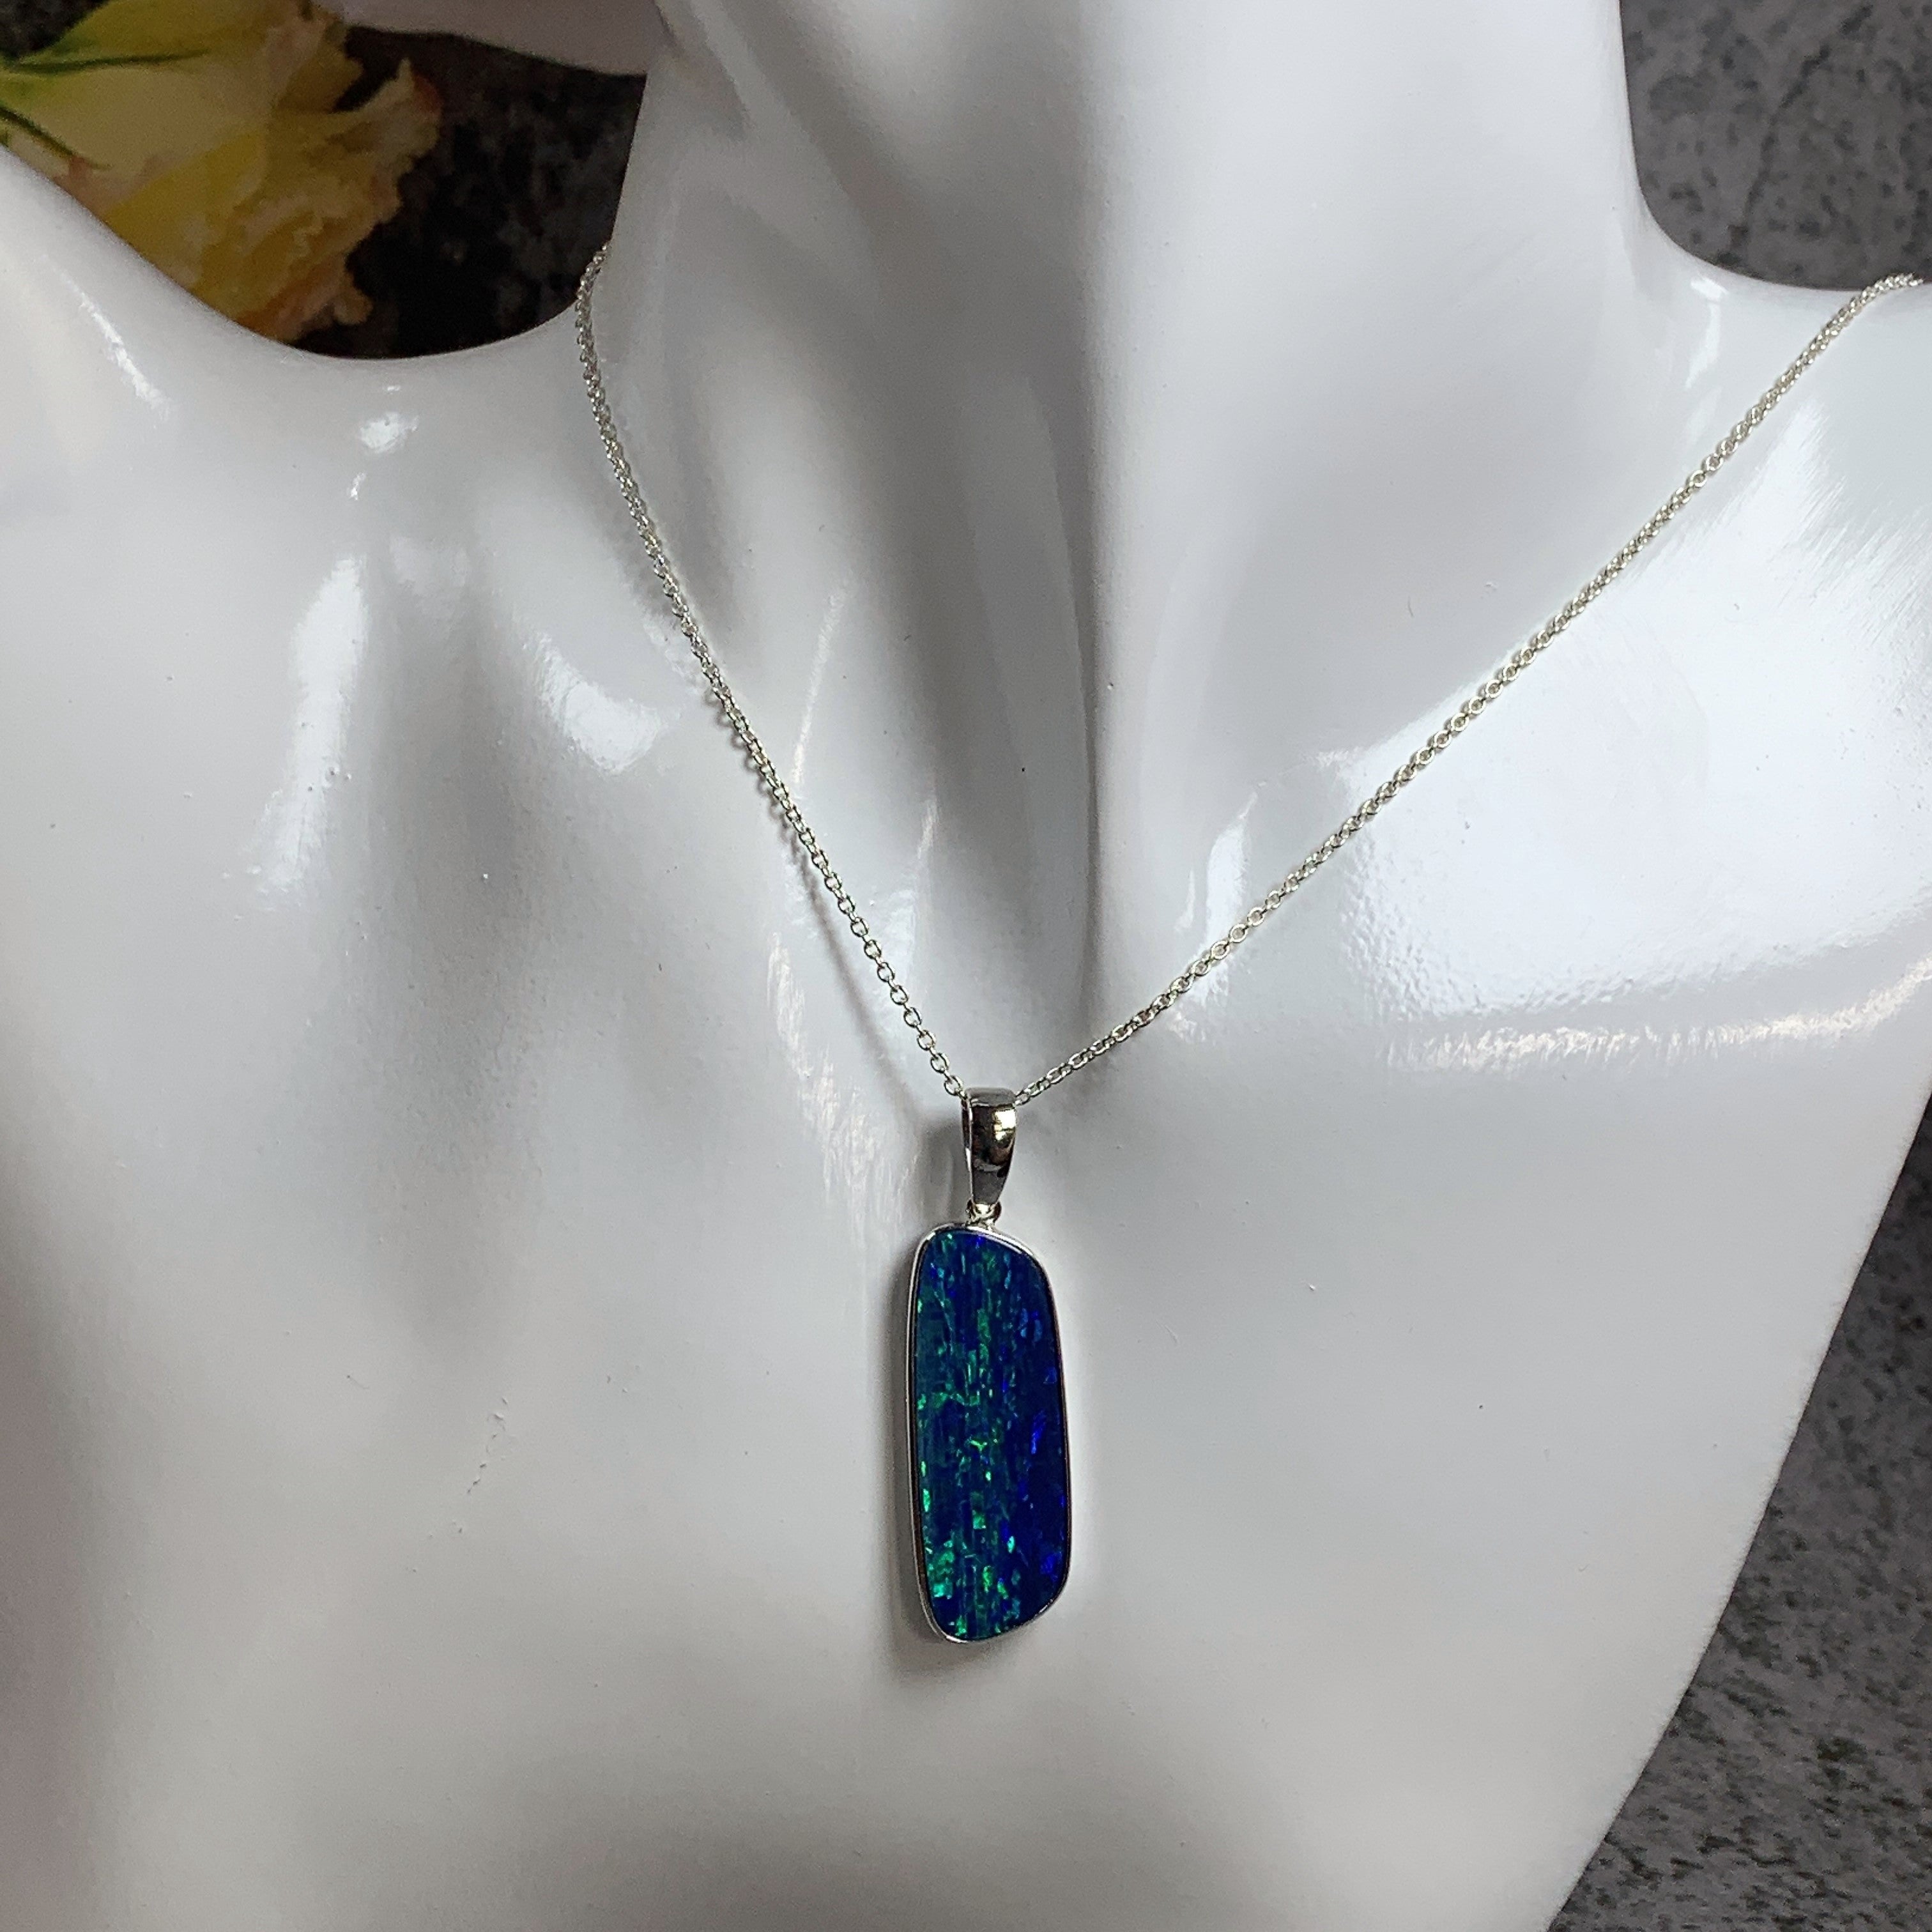 14kt White Gold Opal 9.41ct doublet Blue Green pendant - Masterpiece Jewellery Opal & Gems Sydney Australia | Online Shop